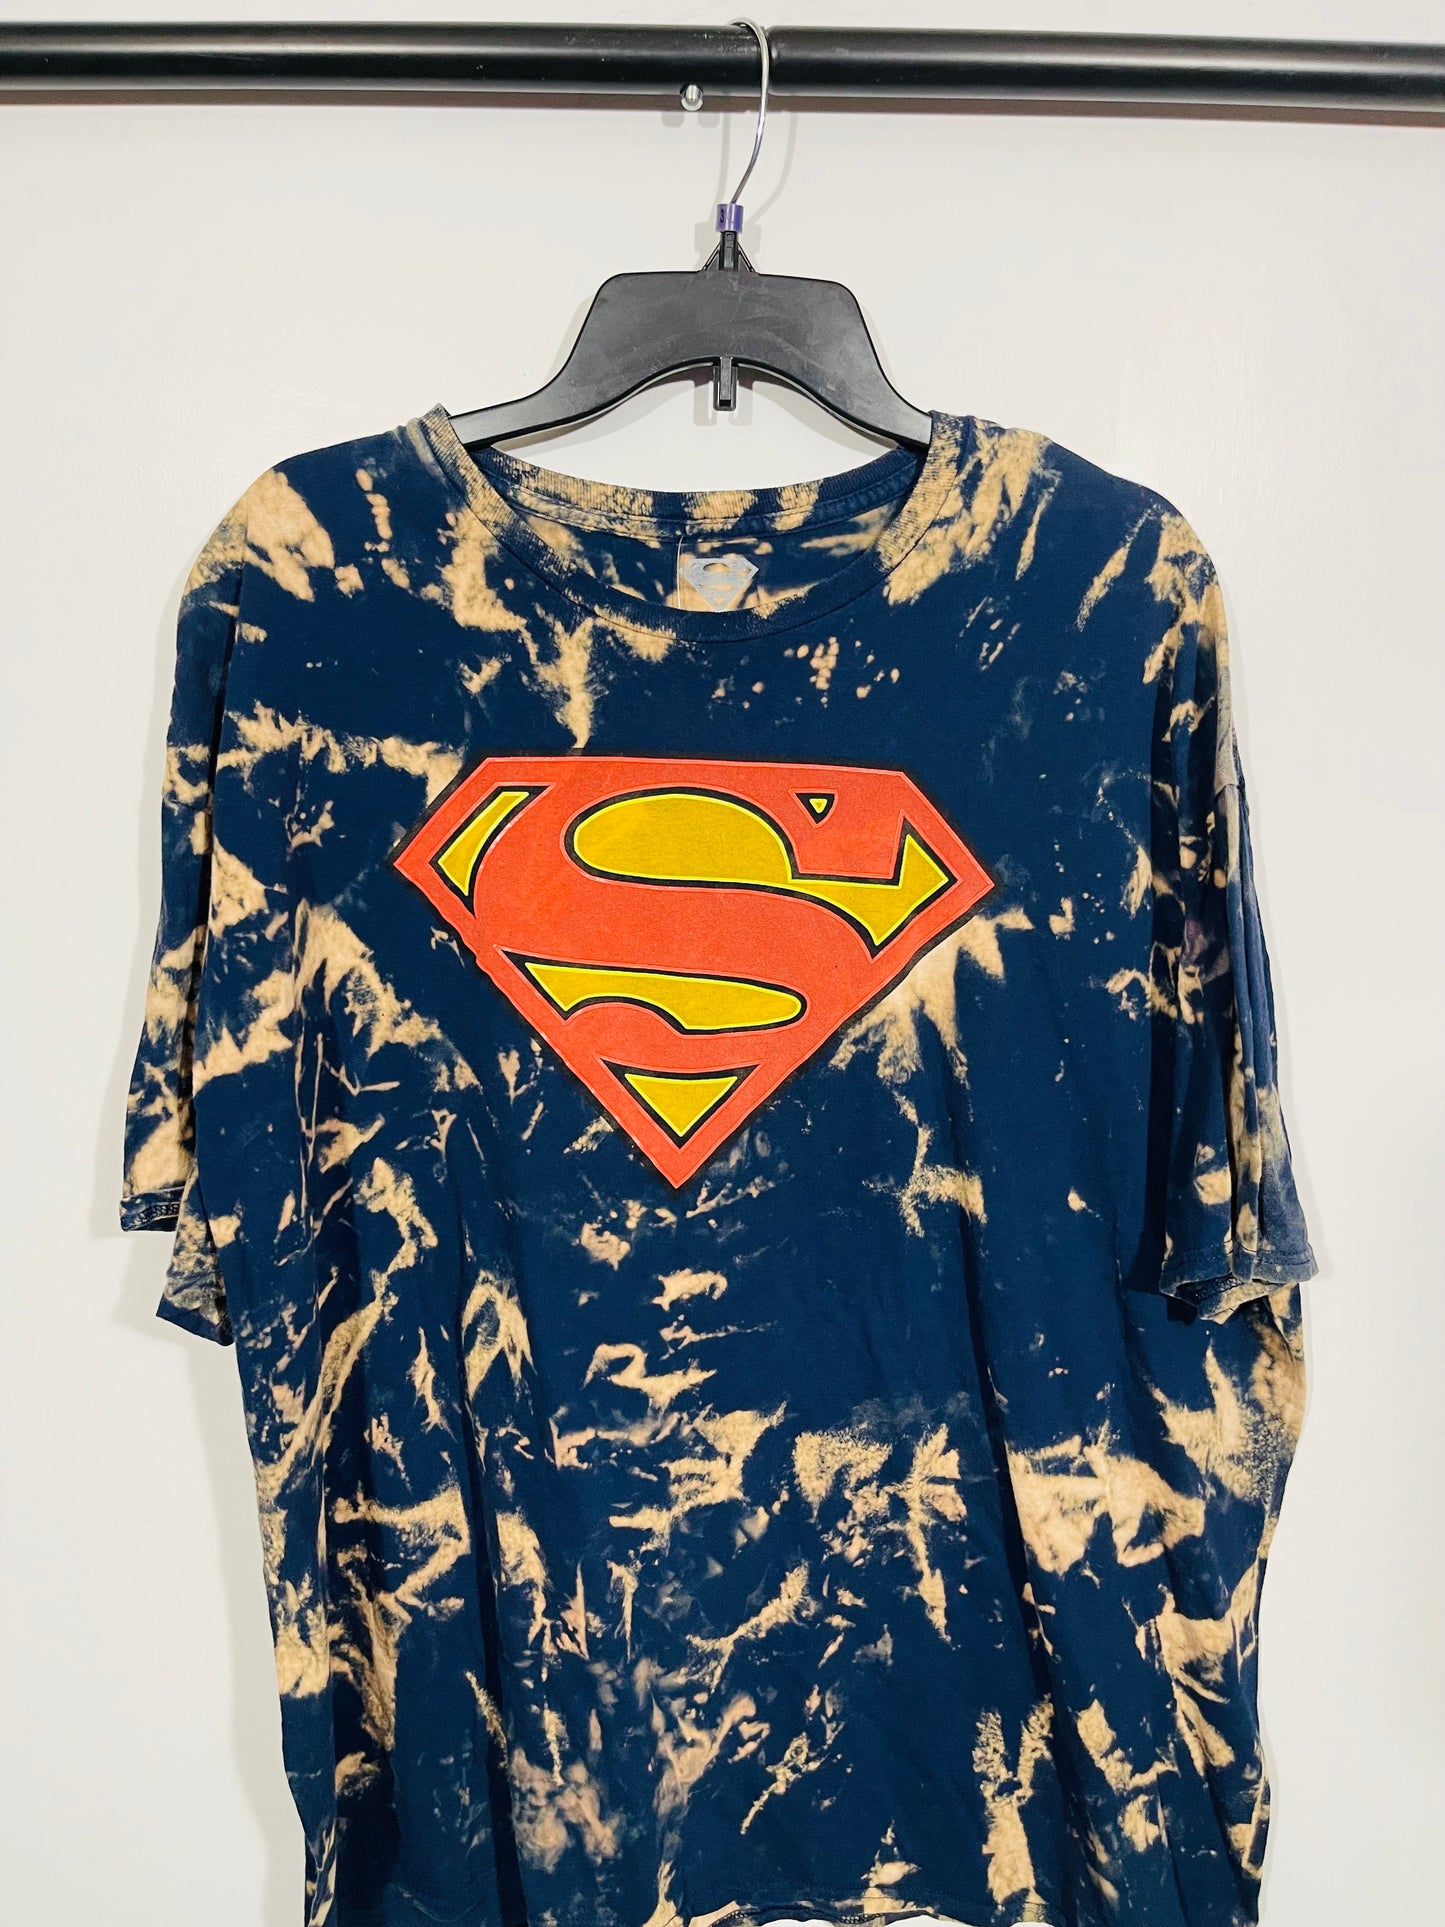 Unisex 3XL Superman Tee - Kicks and Kindness - Shirts & Tops -